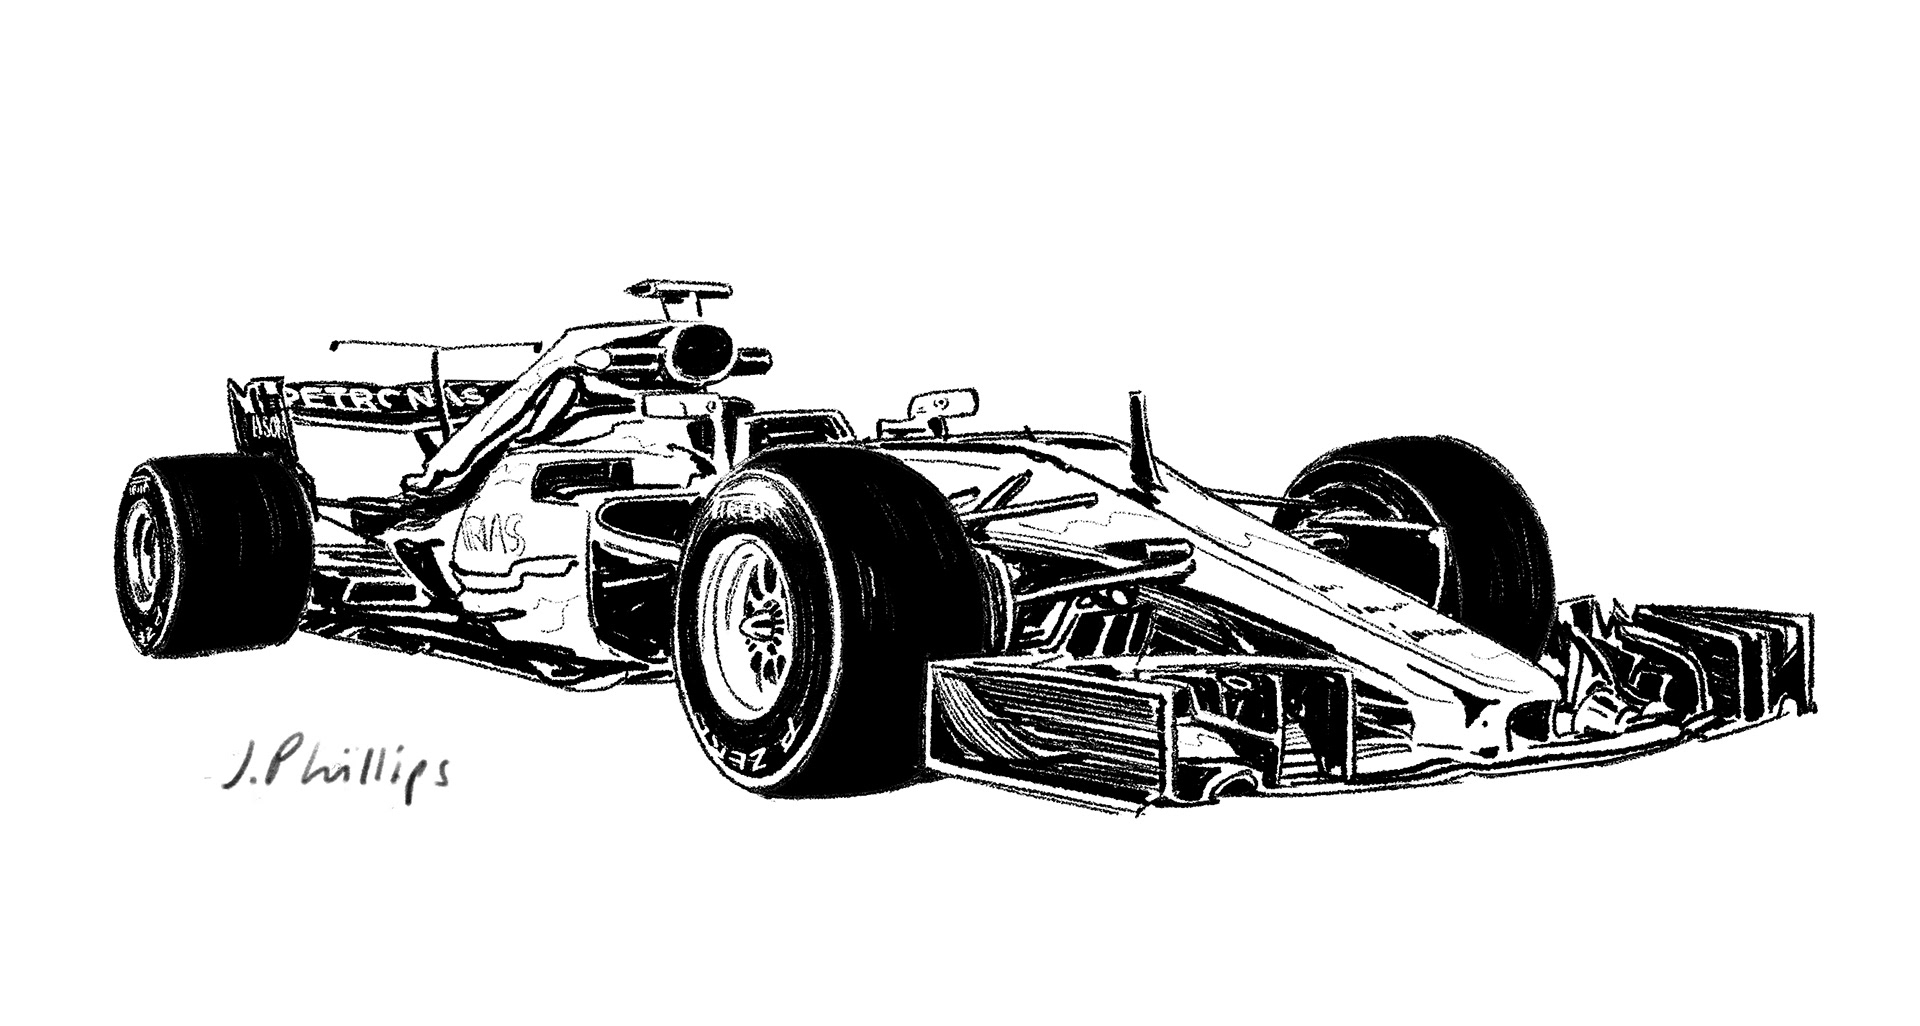 F1 Car Illustration Galleries - That Cham Online